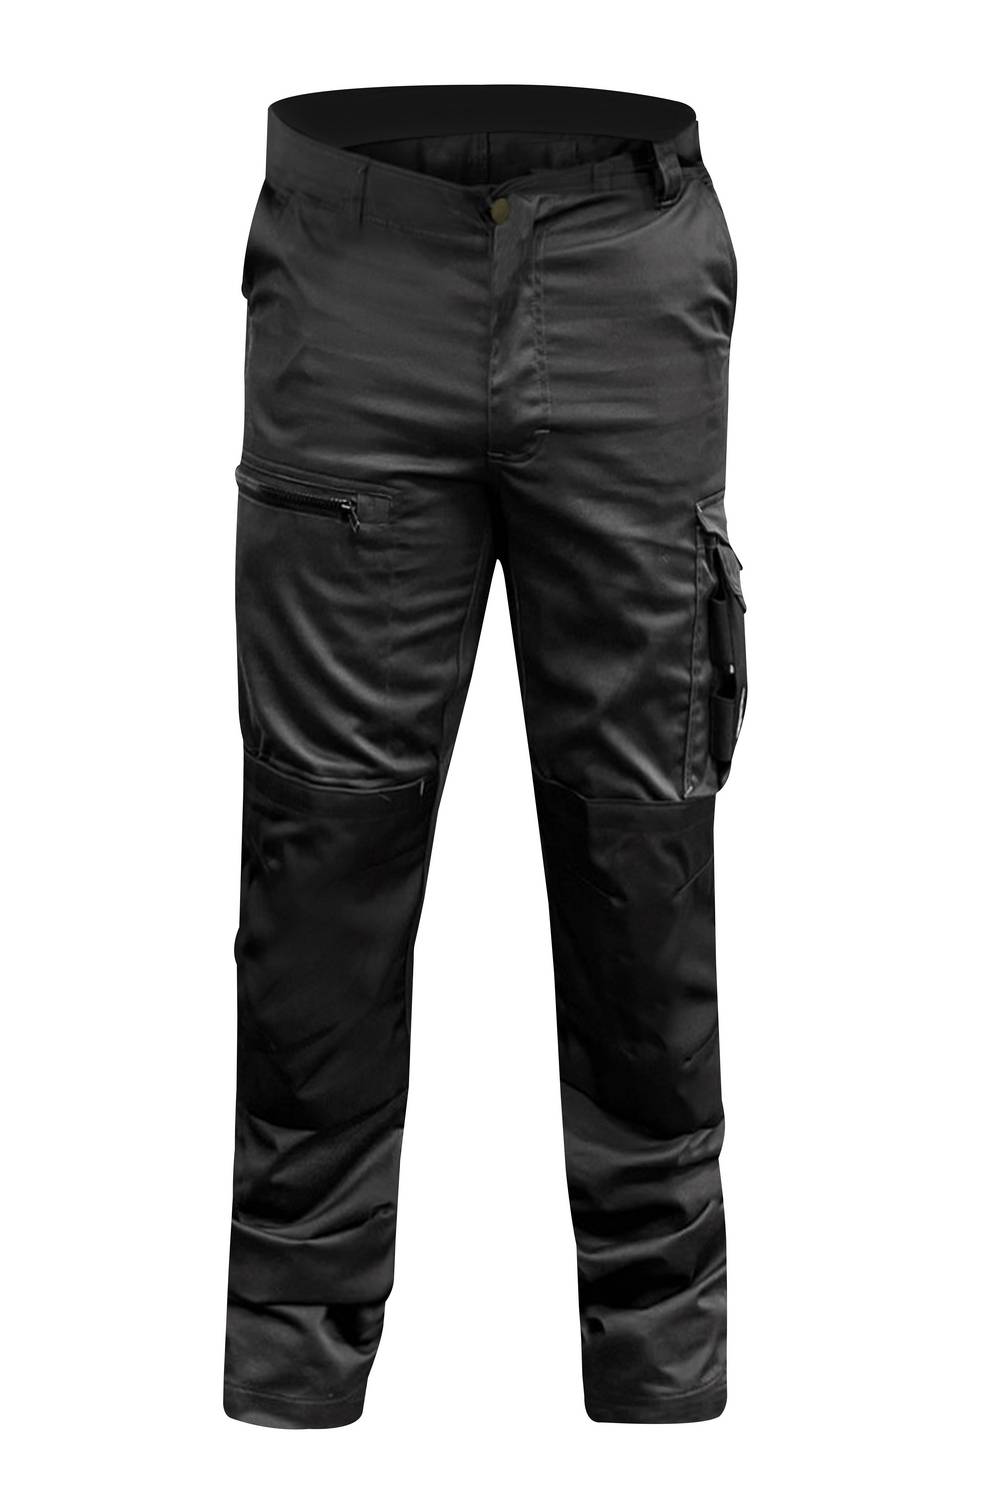 UBERMANN - Pantalón DKT Xpert gris XL